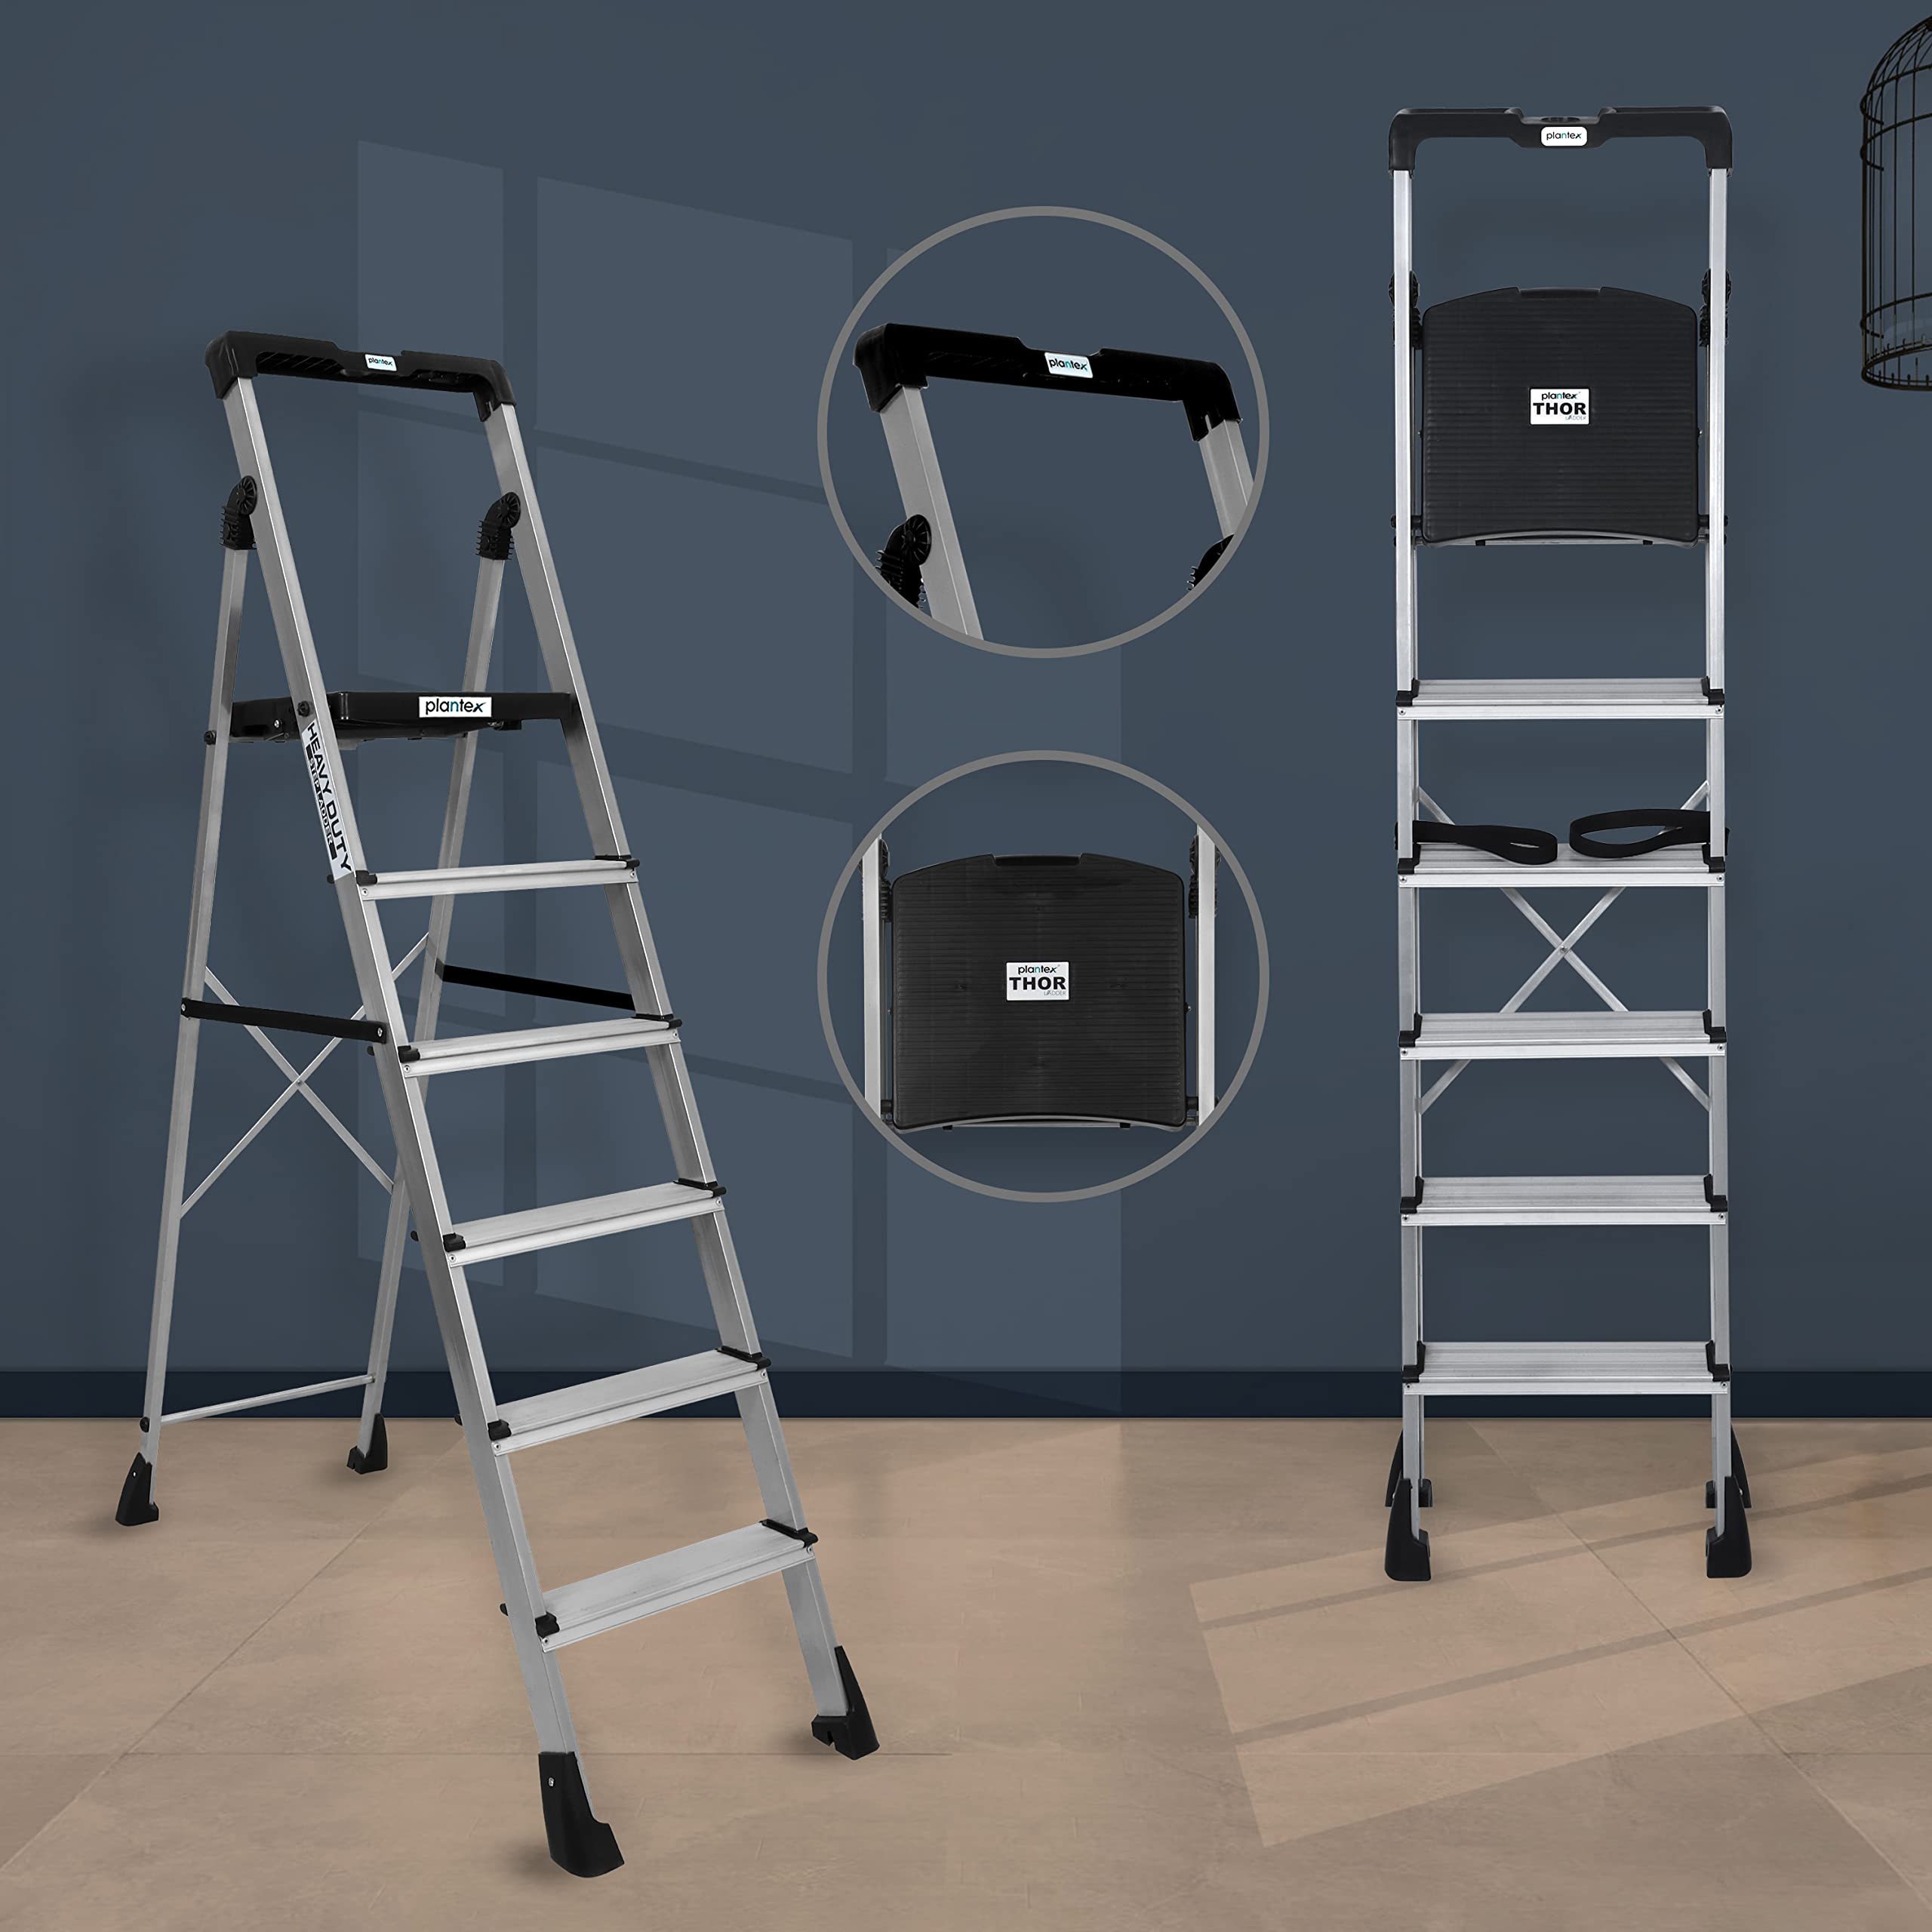 Plantex Thor Aluminium Step Folding Ladder 6 Step for Home with Advanced Locking System - Anti Slip 6 Step Ladder (Silver & Black)